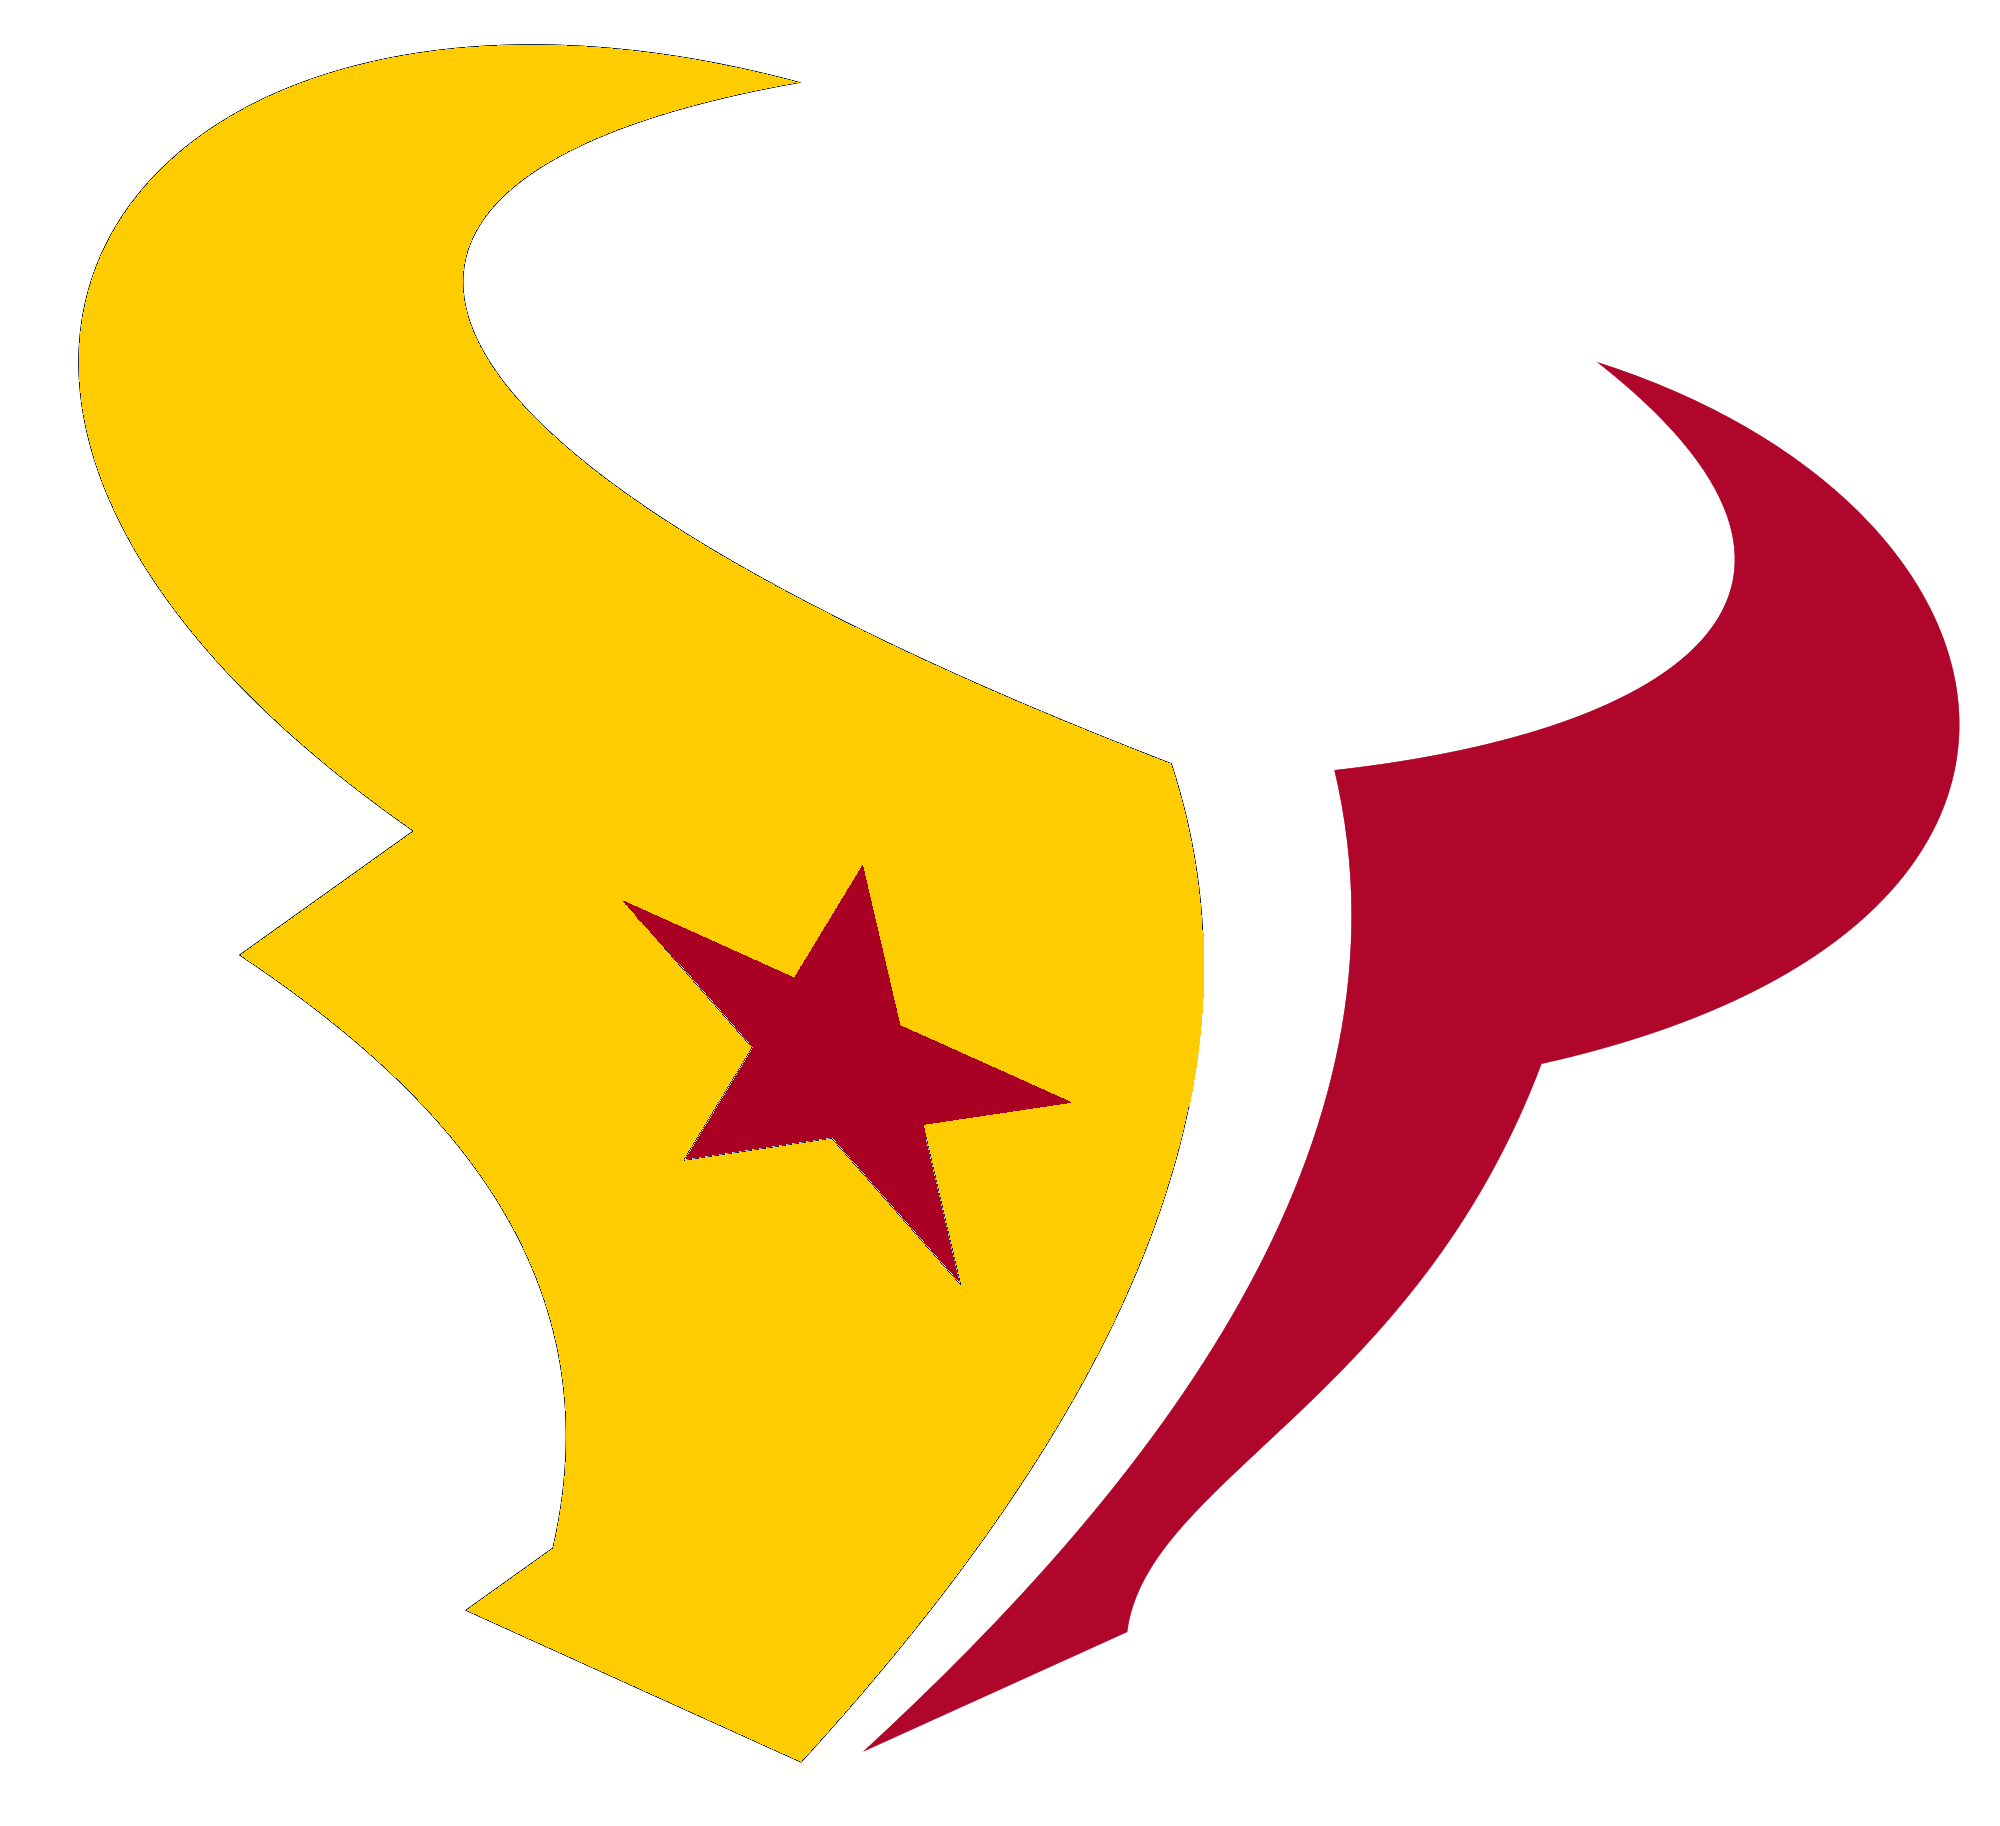 Texans Logo PNG Photo